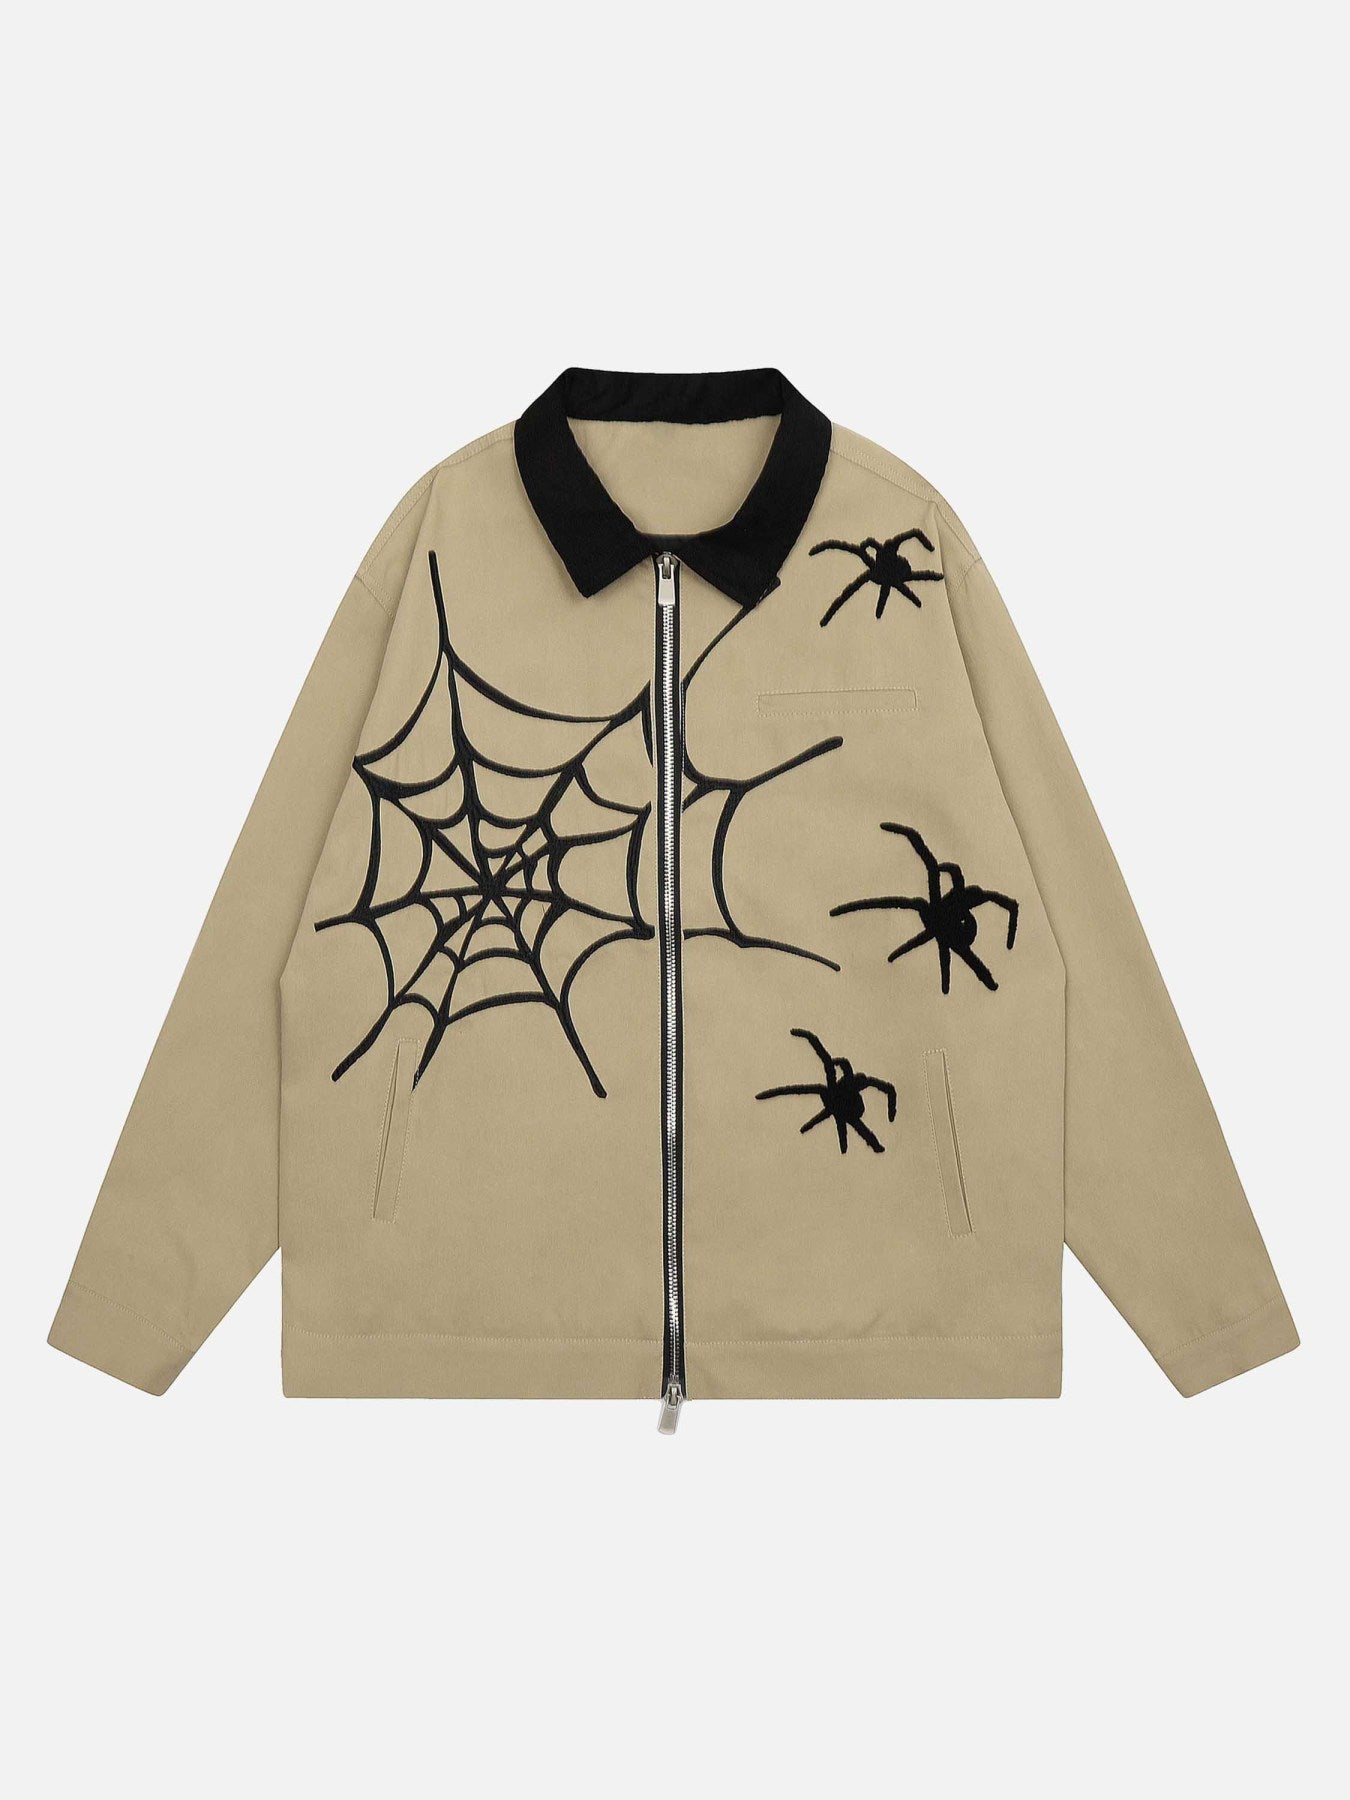 The Supermade Large Spider Web Embroidered Denim Jacket